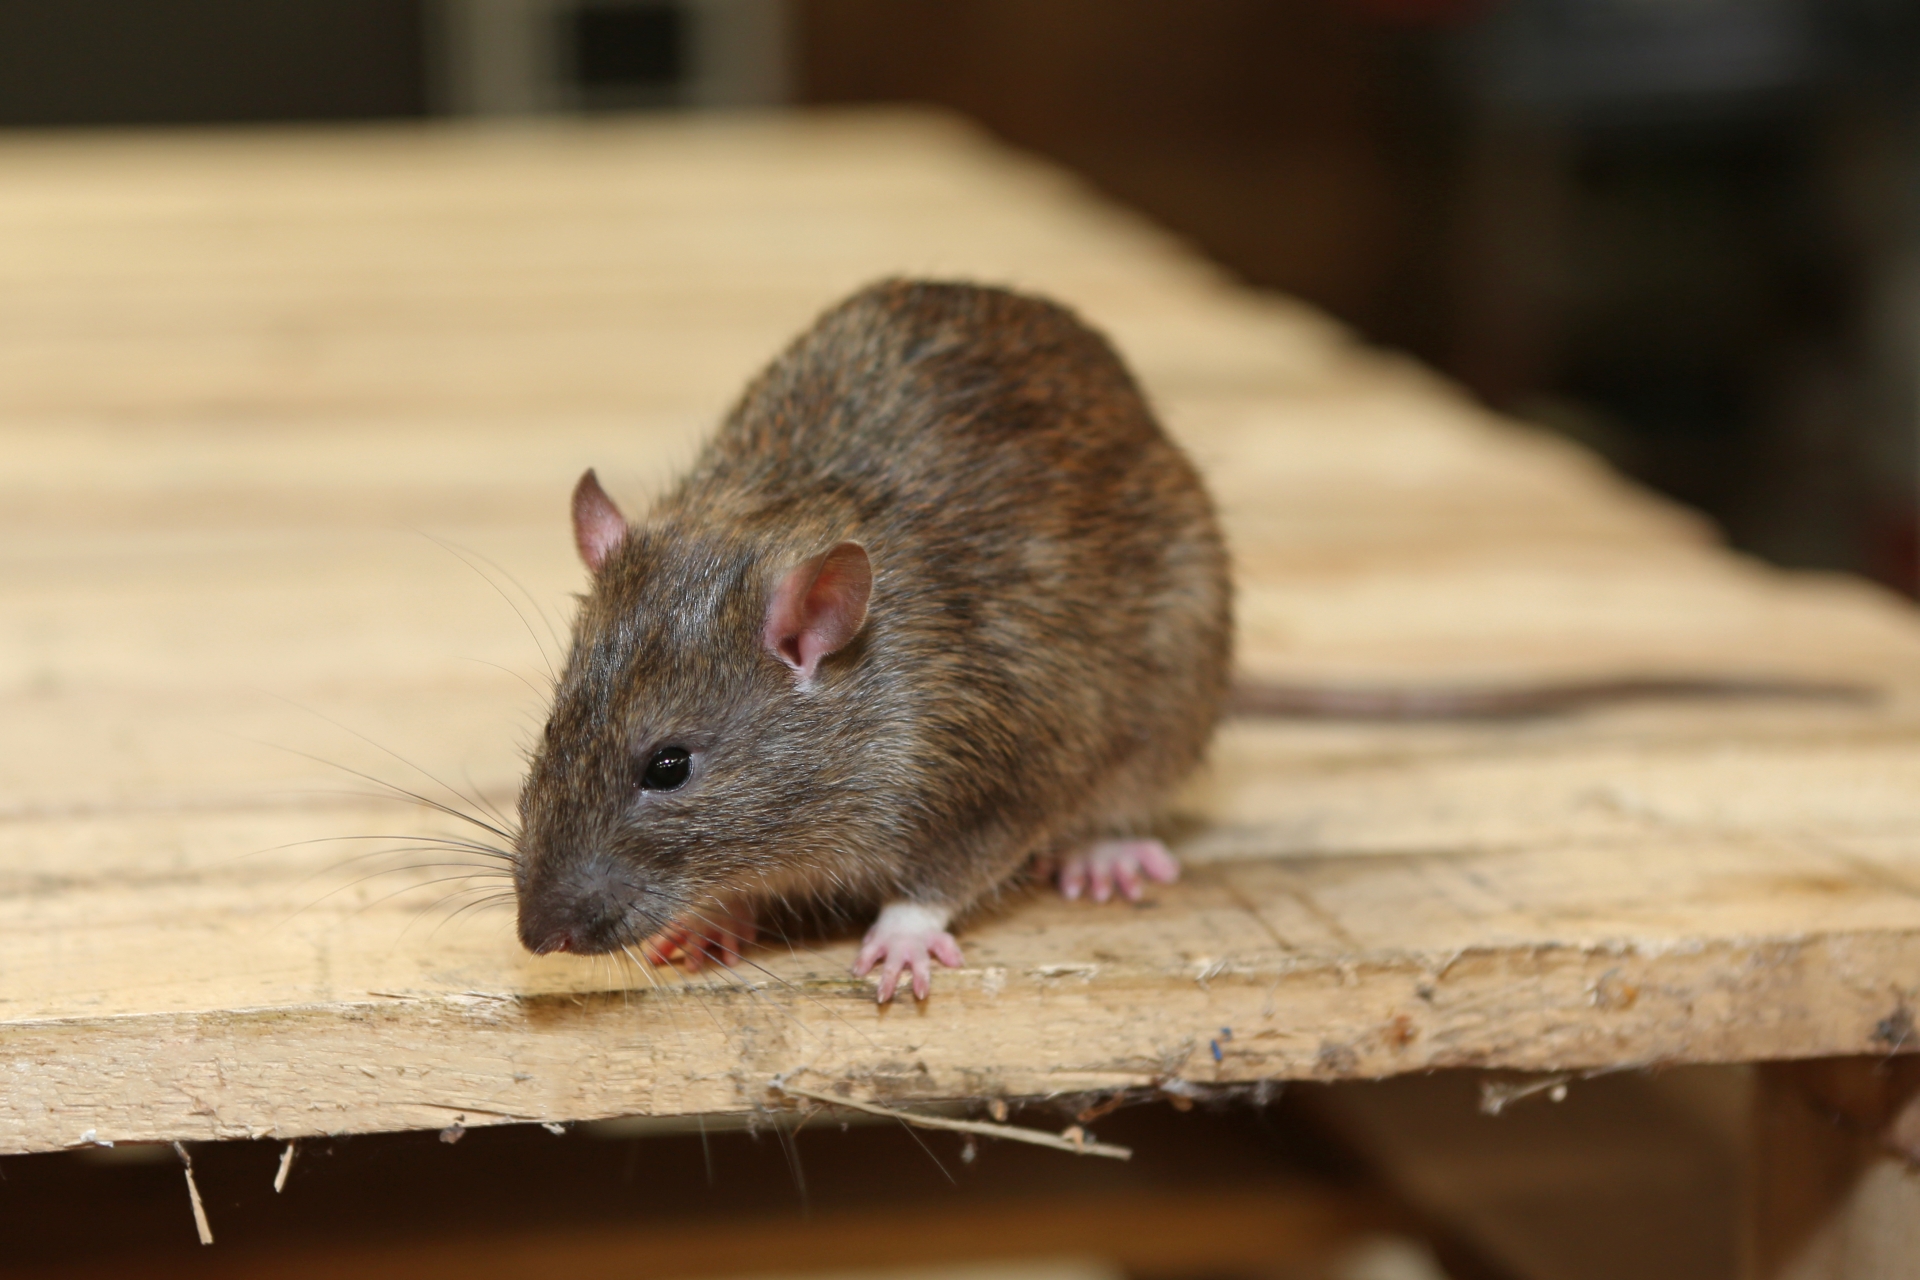 Rat extermination, Pest Control in Wealdstone, Harrow Weald, HA3. Call Now 020 8166 9746